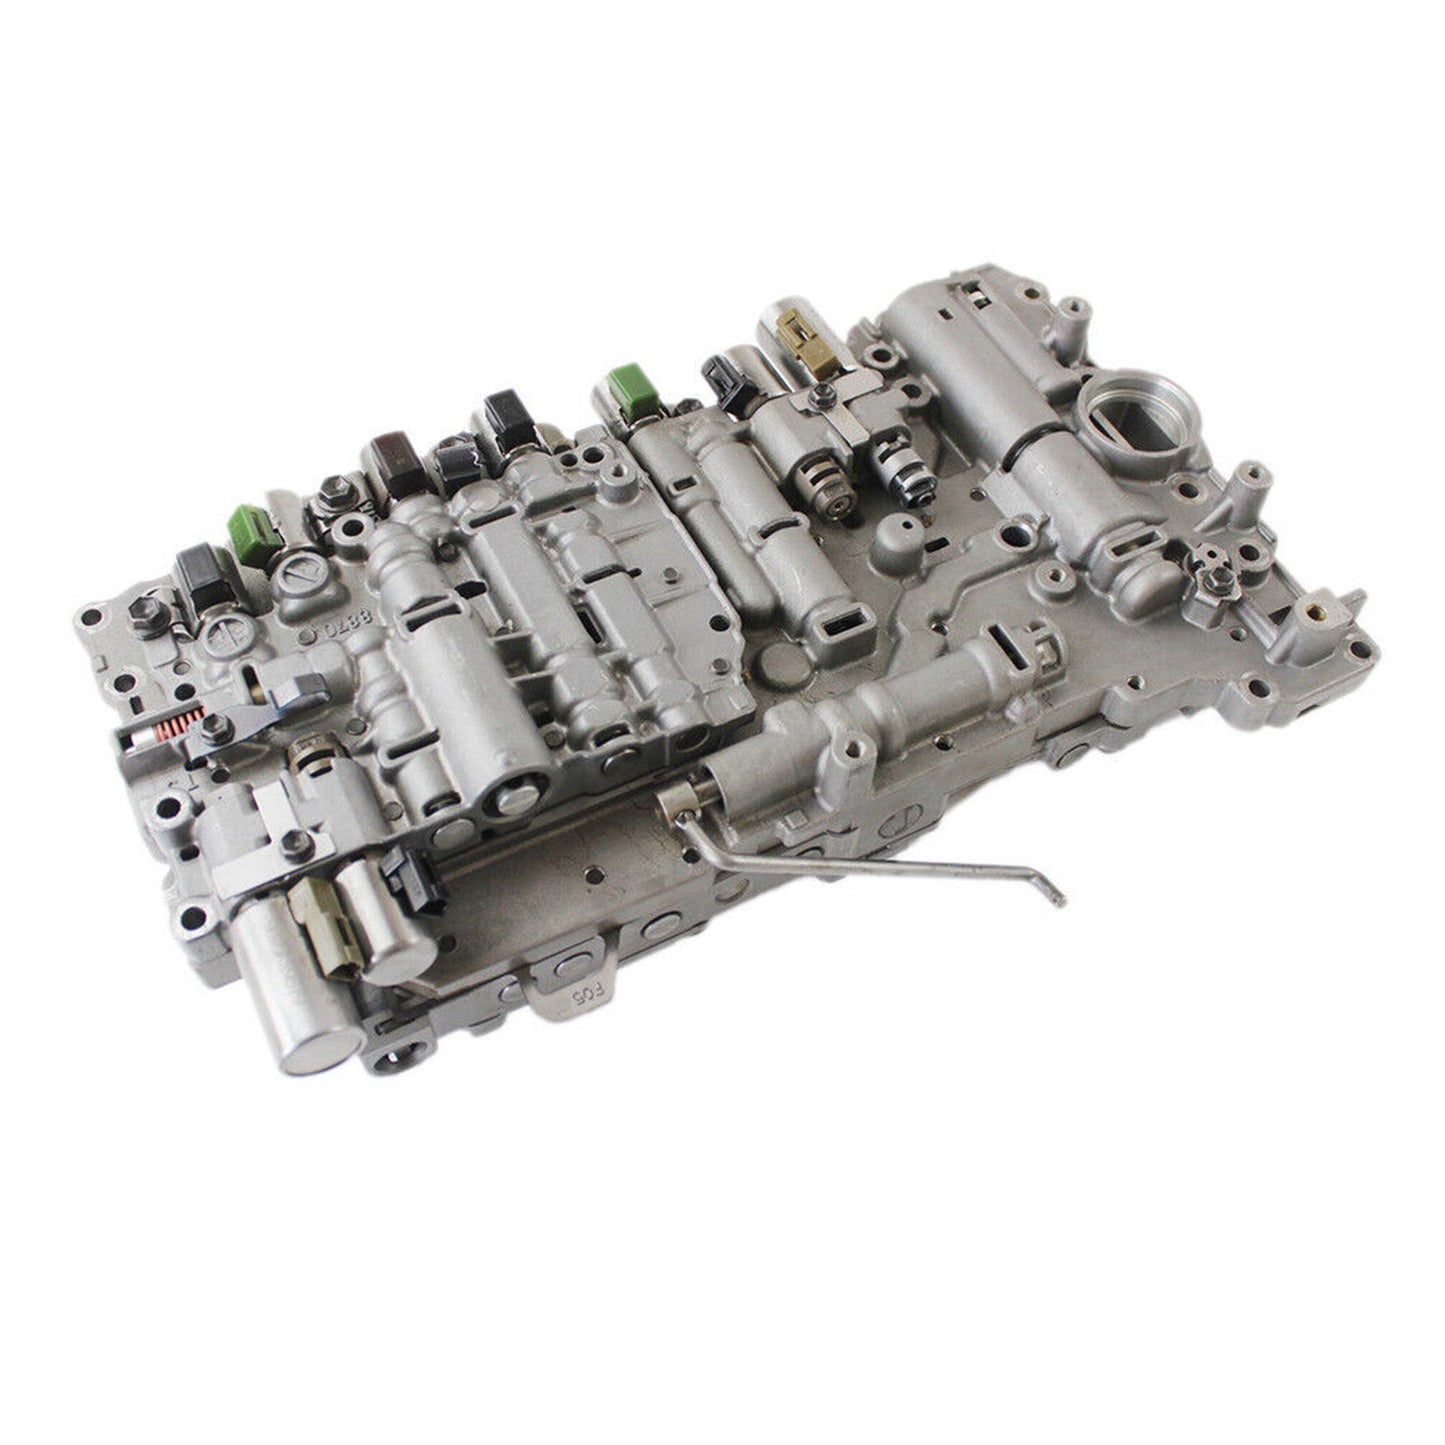 Landwind LX 2011 6 SP 4WD 4.6L A760 A760E Transmission Valve Body W/9 Solenoids Casting#8870